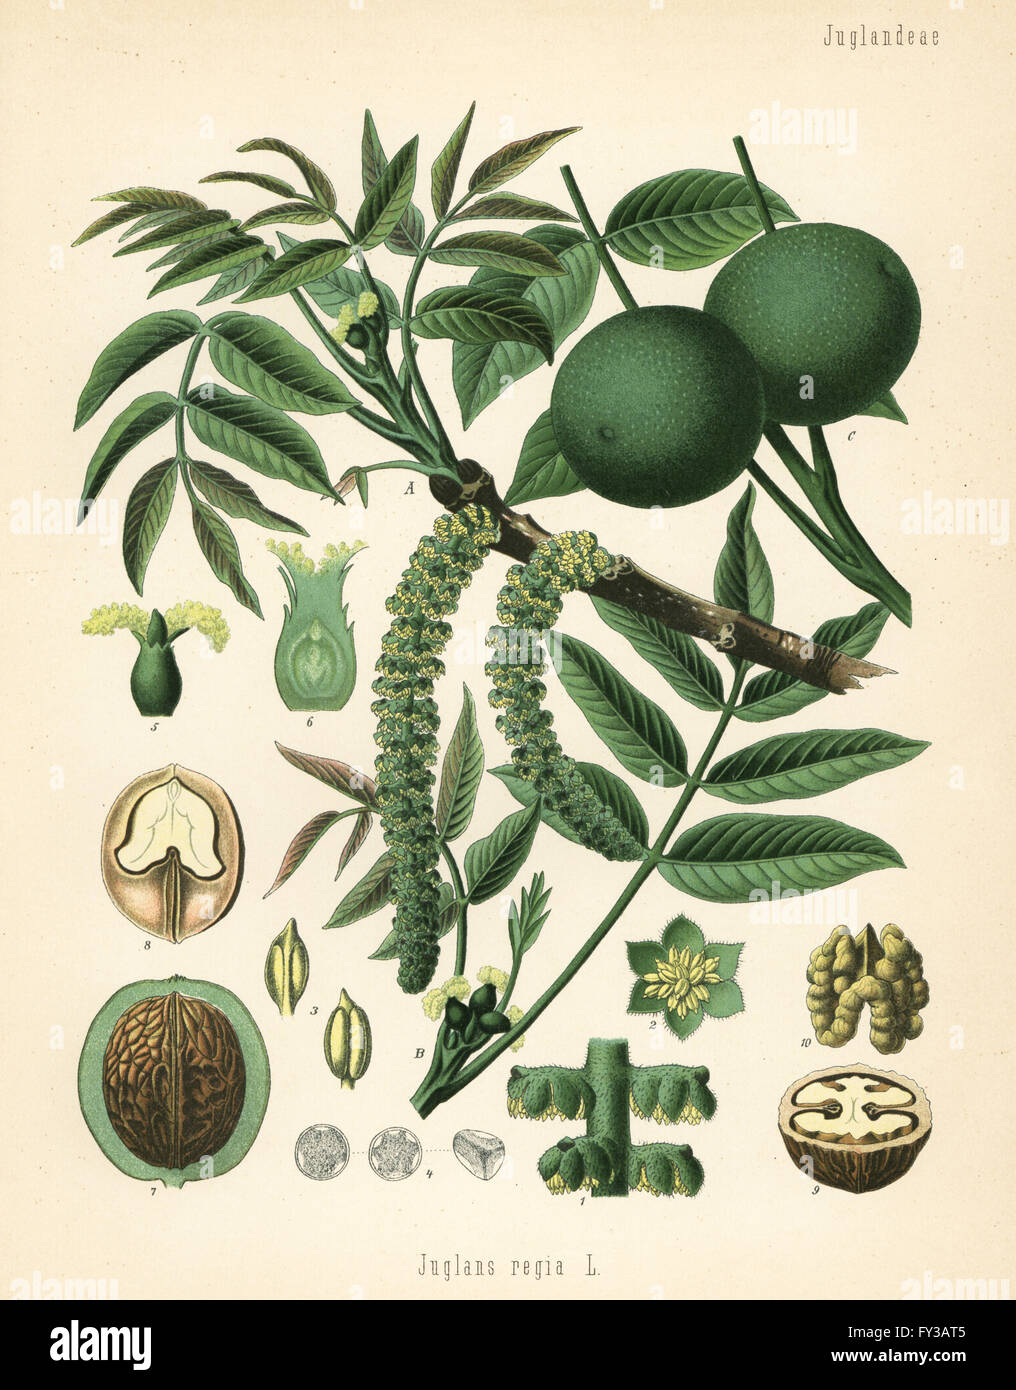 Walnut, Juglans regia. Chromolithograph after a botanical illustration from Hermann Adolph Koehler's Medicinal Plants, edited by Gustav Pabst, Koehler, Germany, 1887. Stock Photo